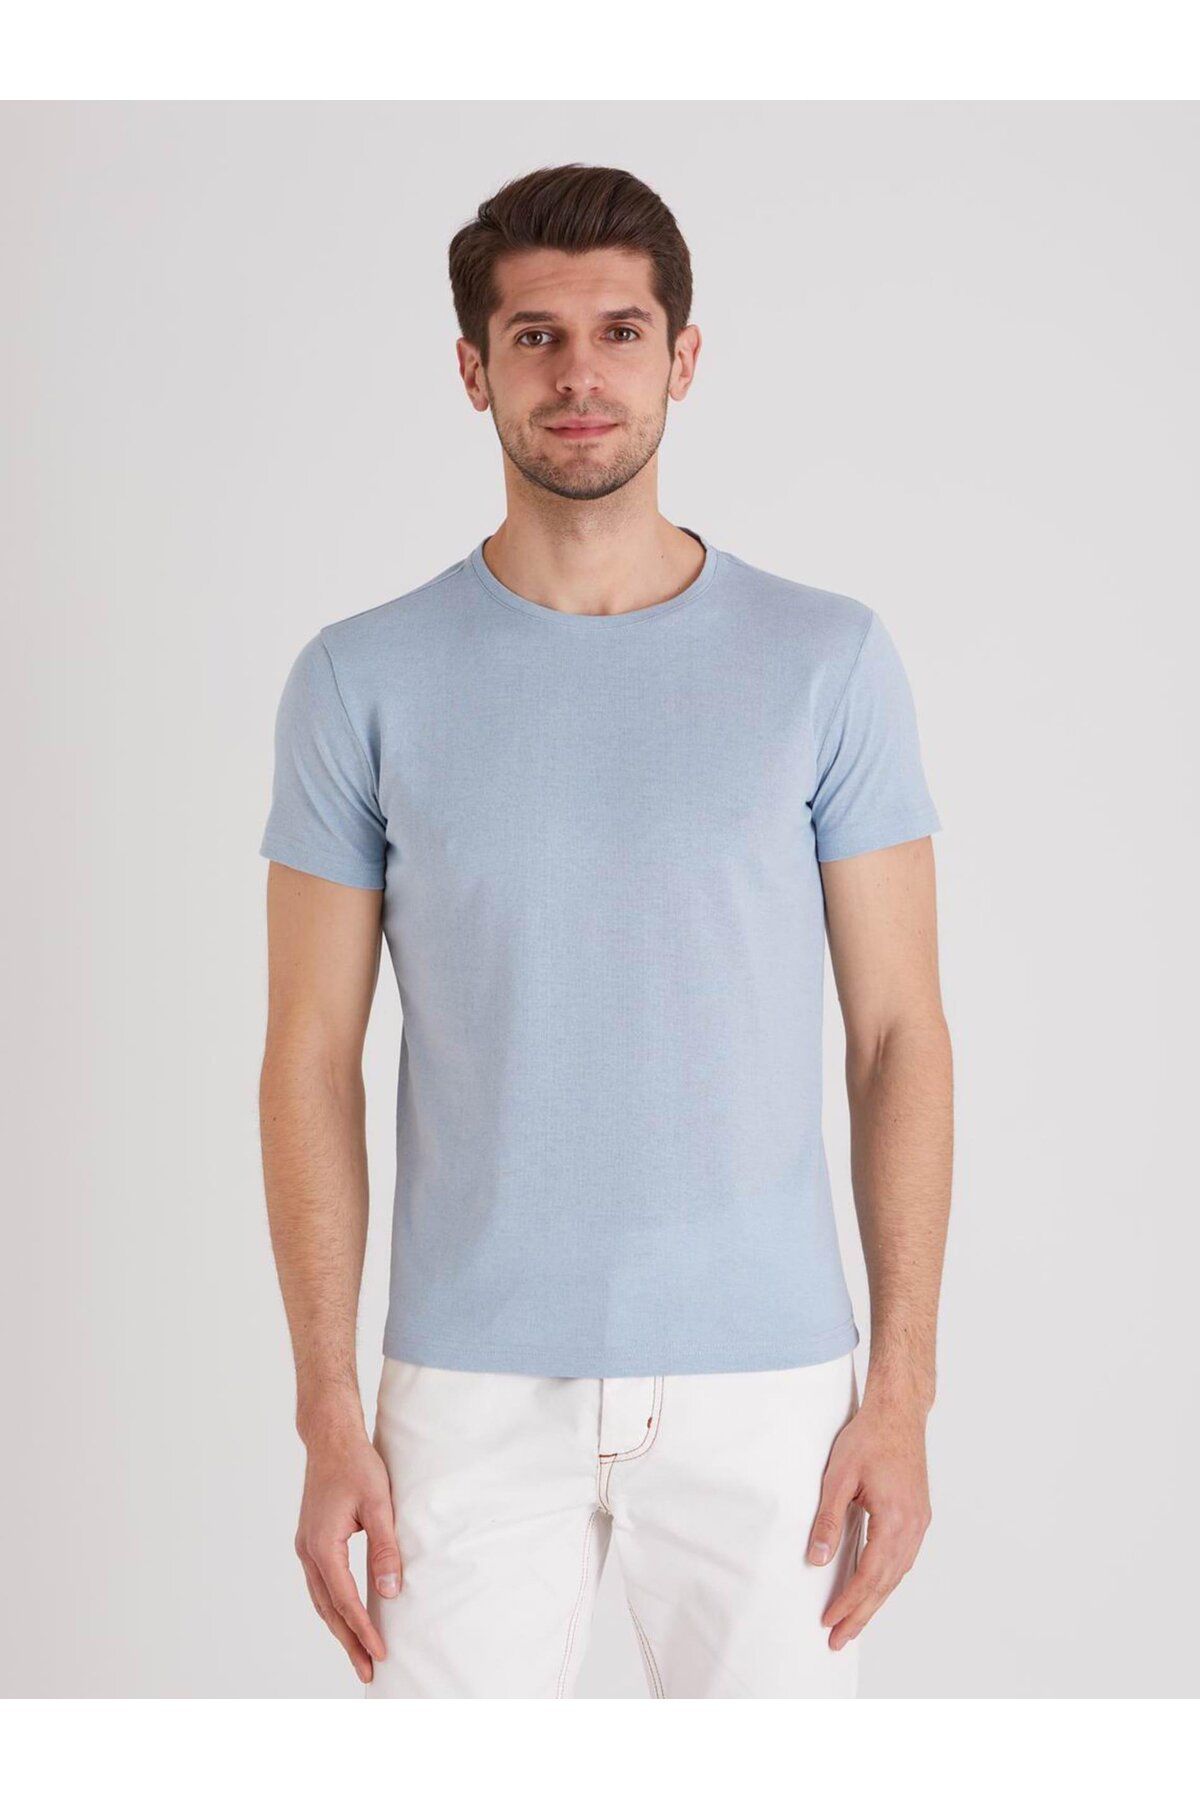 Dufy Açık Mavi Erkek Slim Fit Düz Bisiklet Yaka Tshirt - 69568